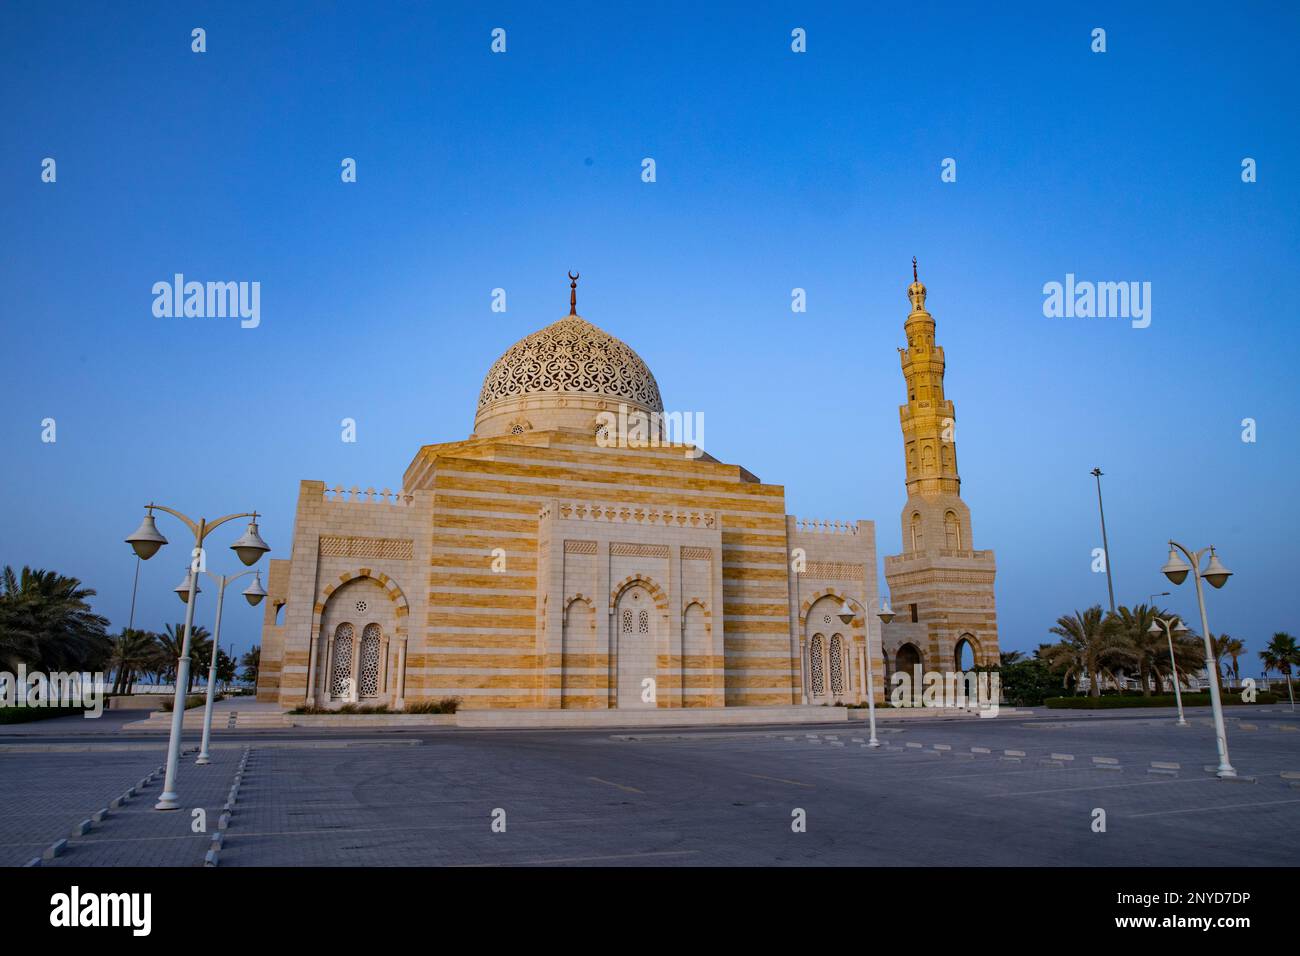 Grande moschea di Shaikh Isa Bin Salman al Khalifa, Regno del Bahrain, Medio Oriente. Foto Stock